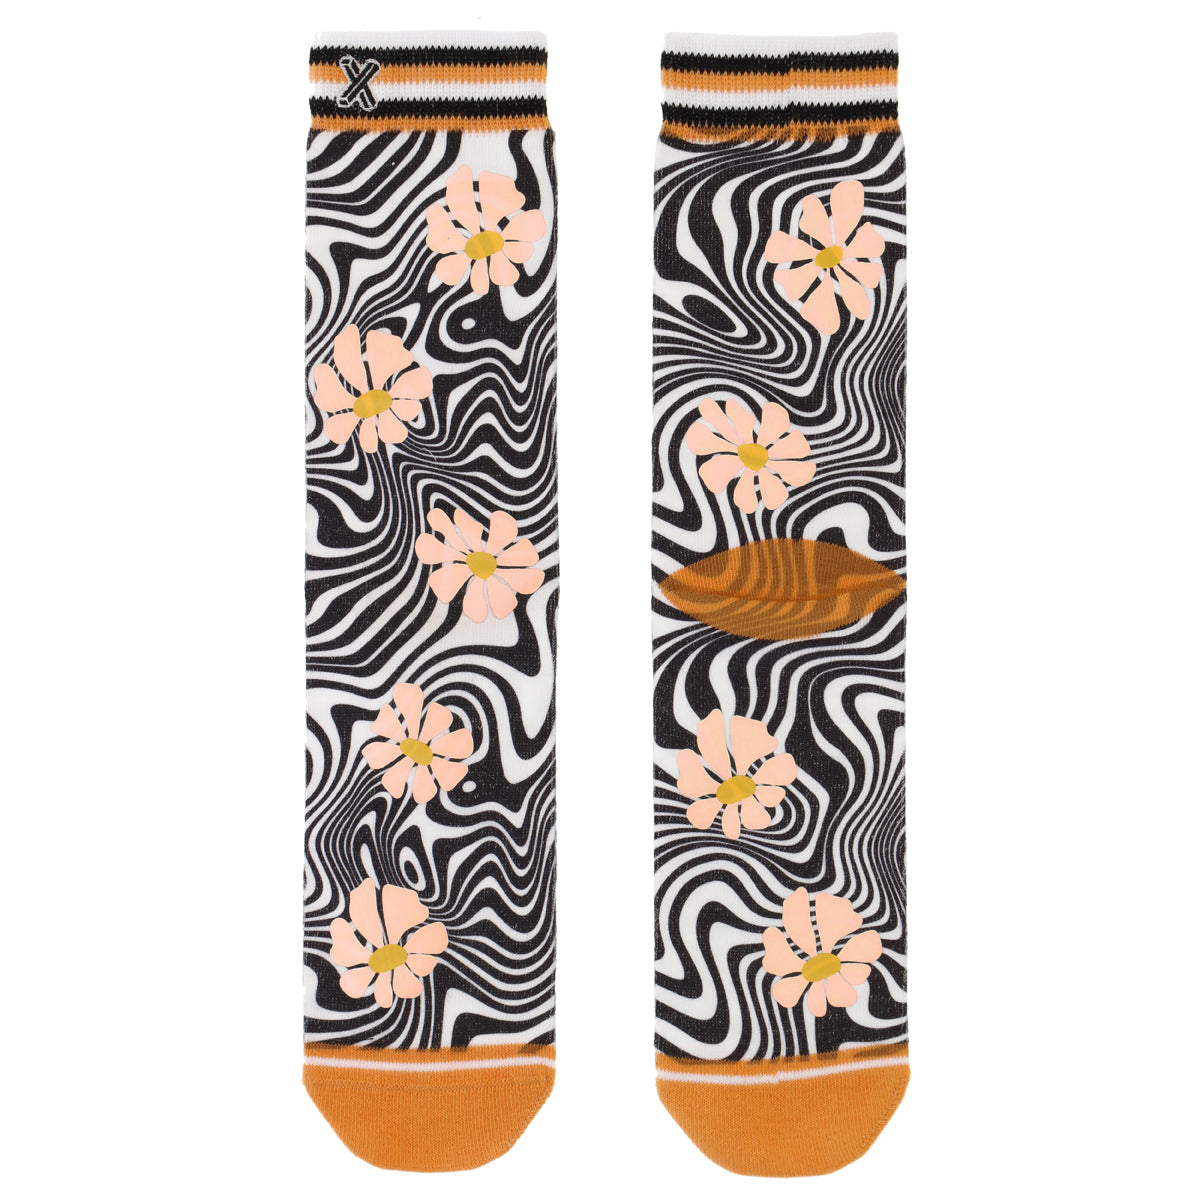 Retro Flowers women's socks